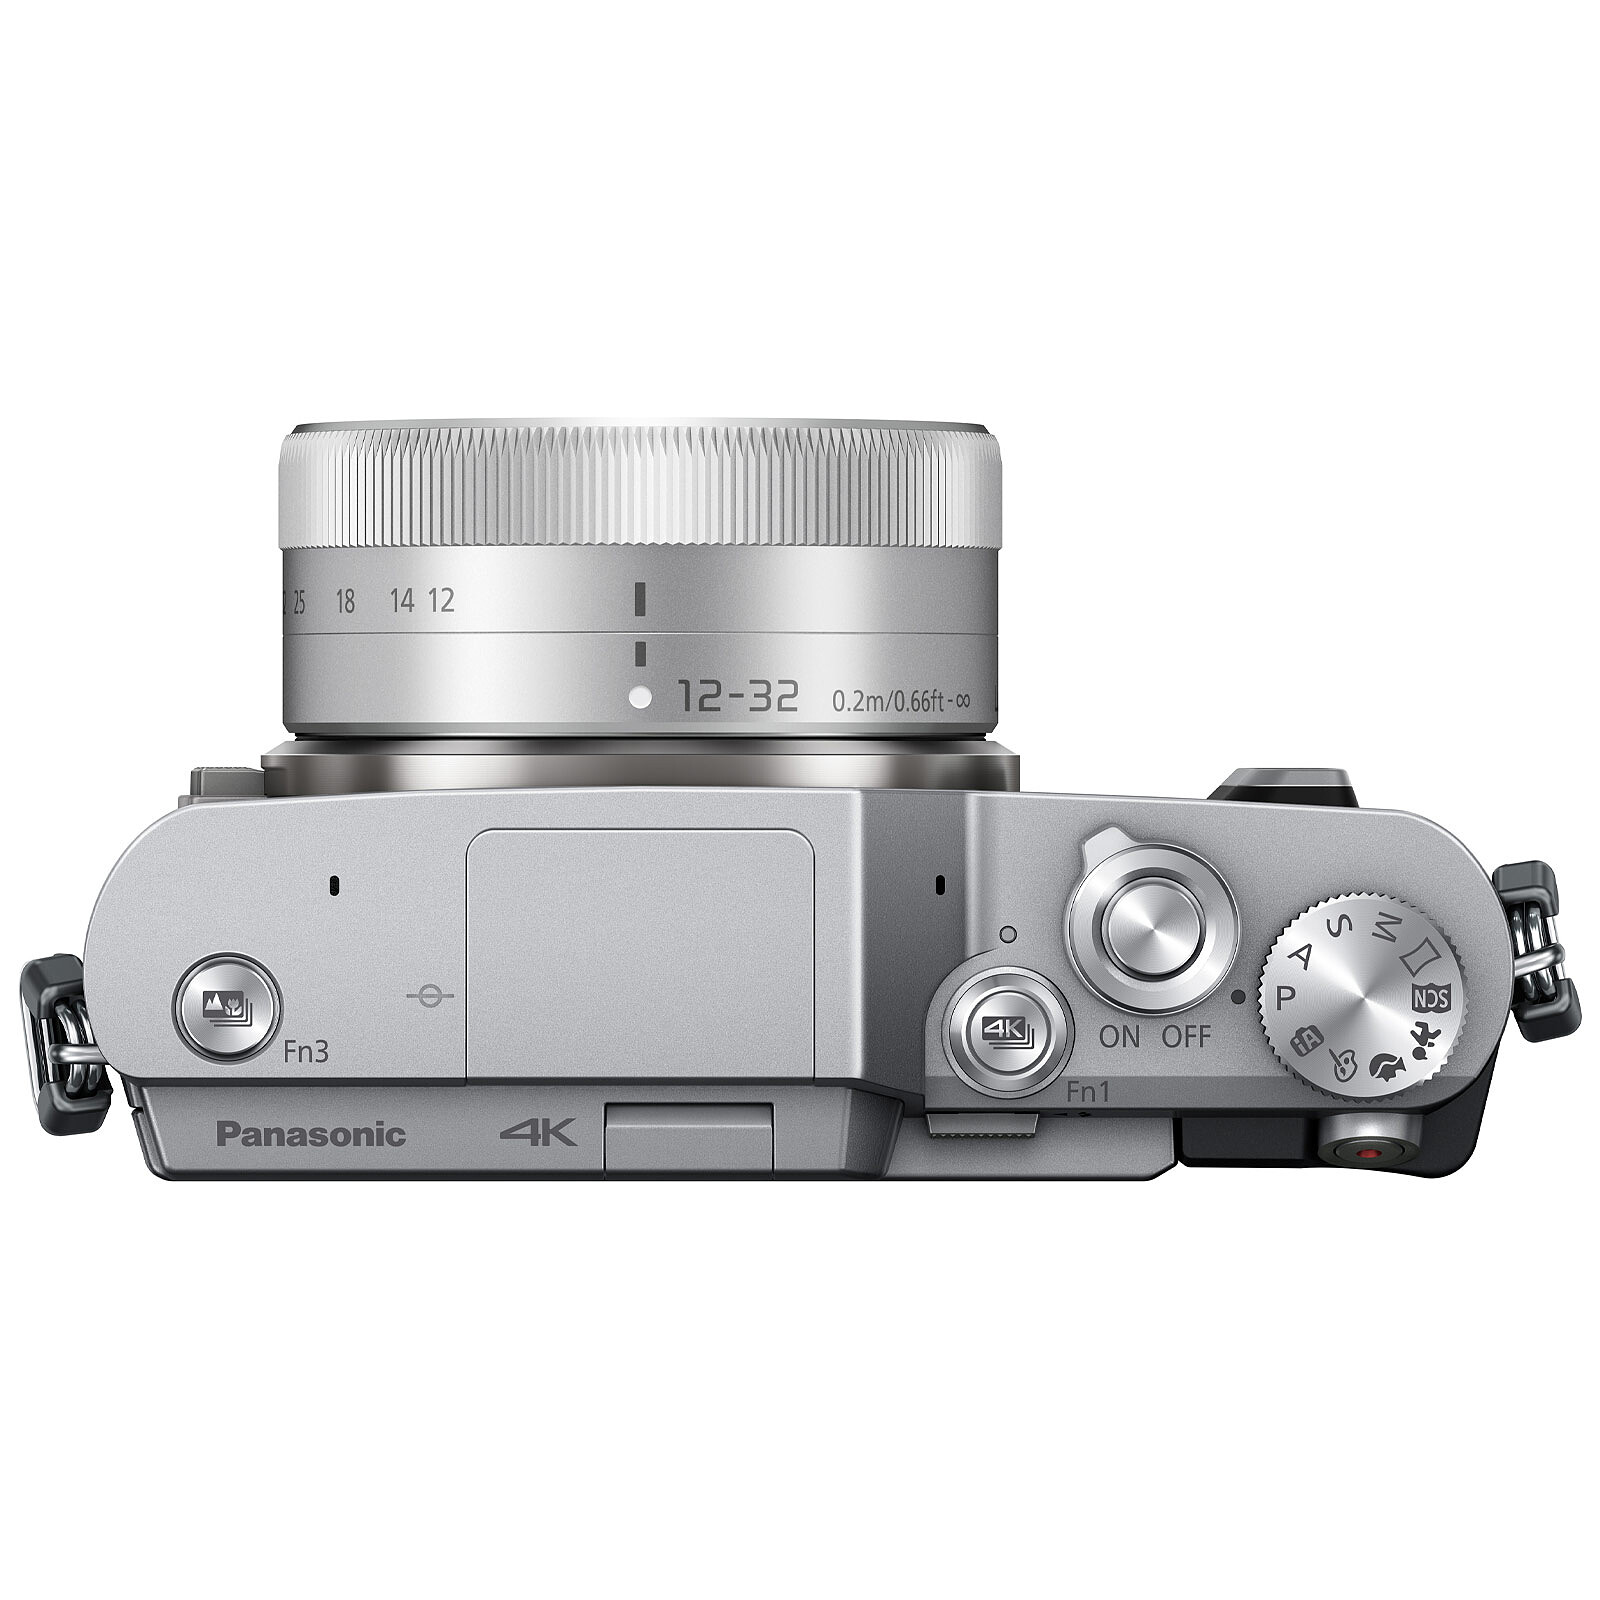 straf stromen kijk in Panasonic DC-GX880K Silver - Mirrorless camera Panasonic on LDLC